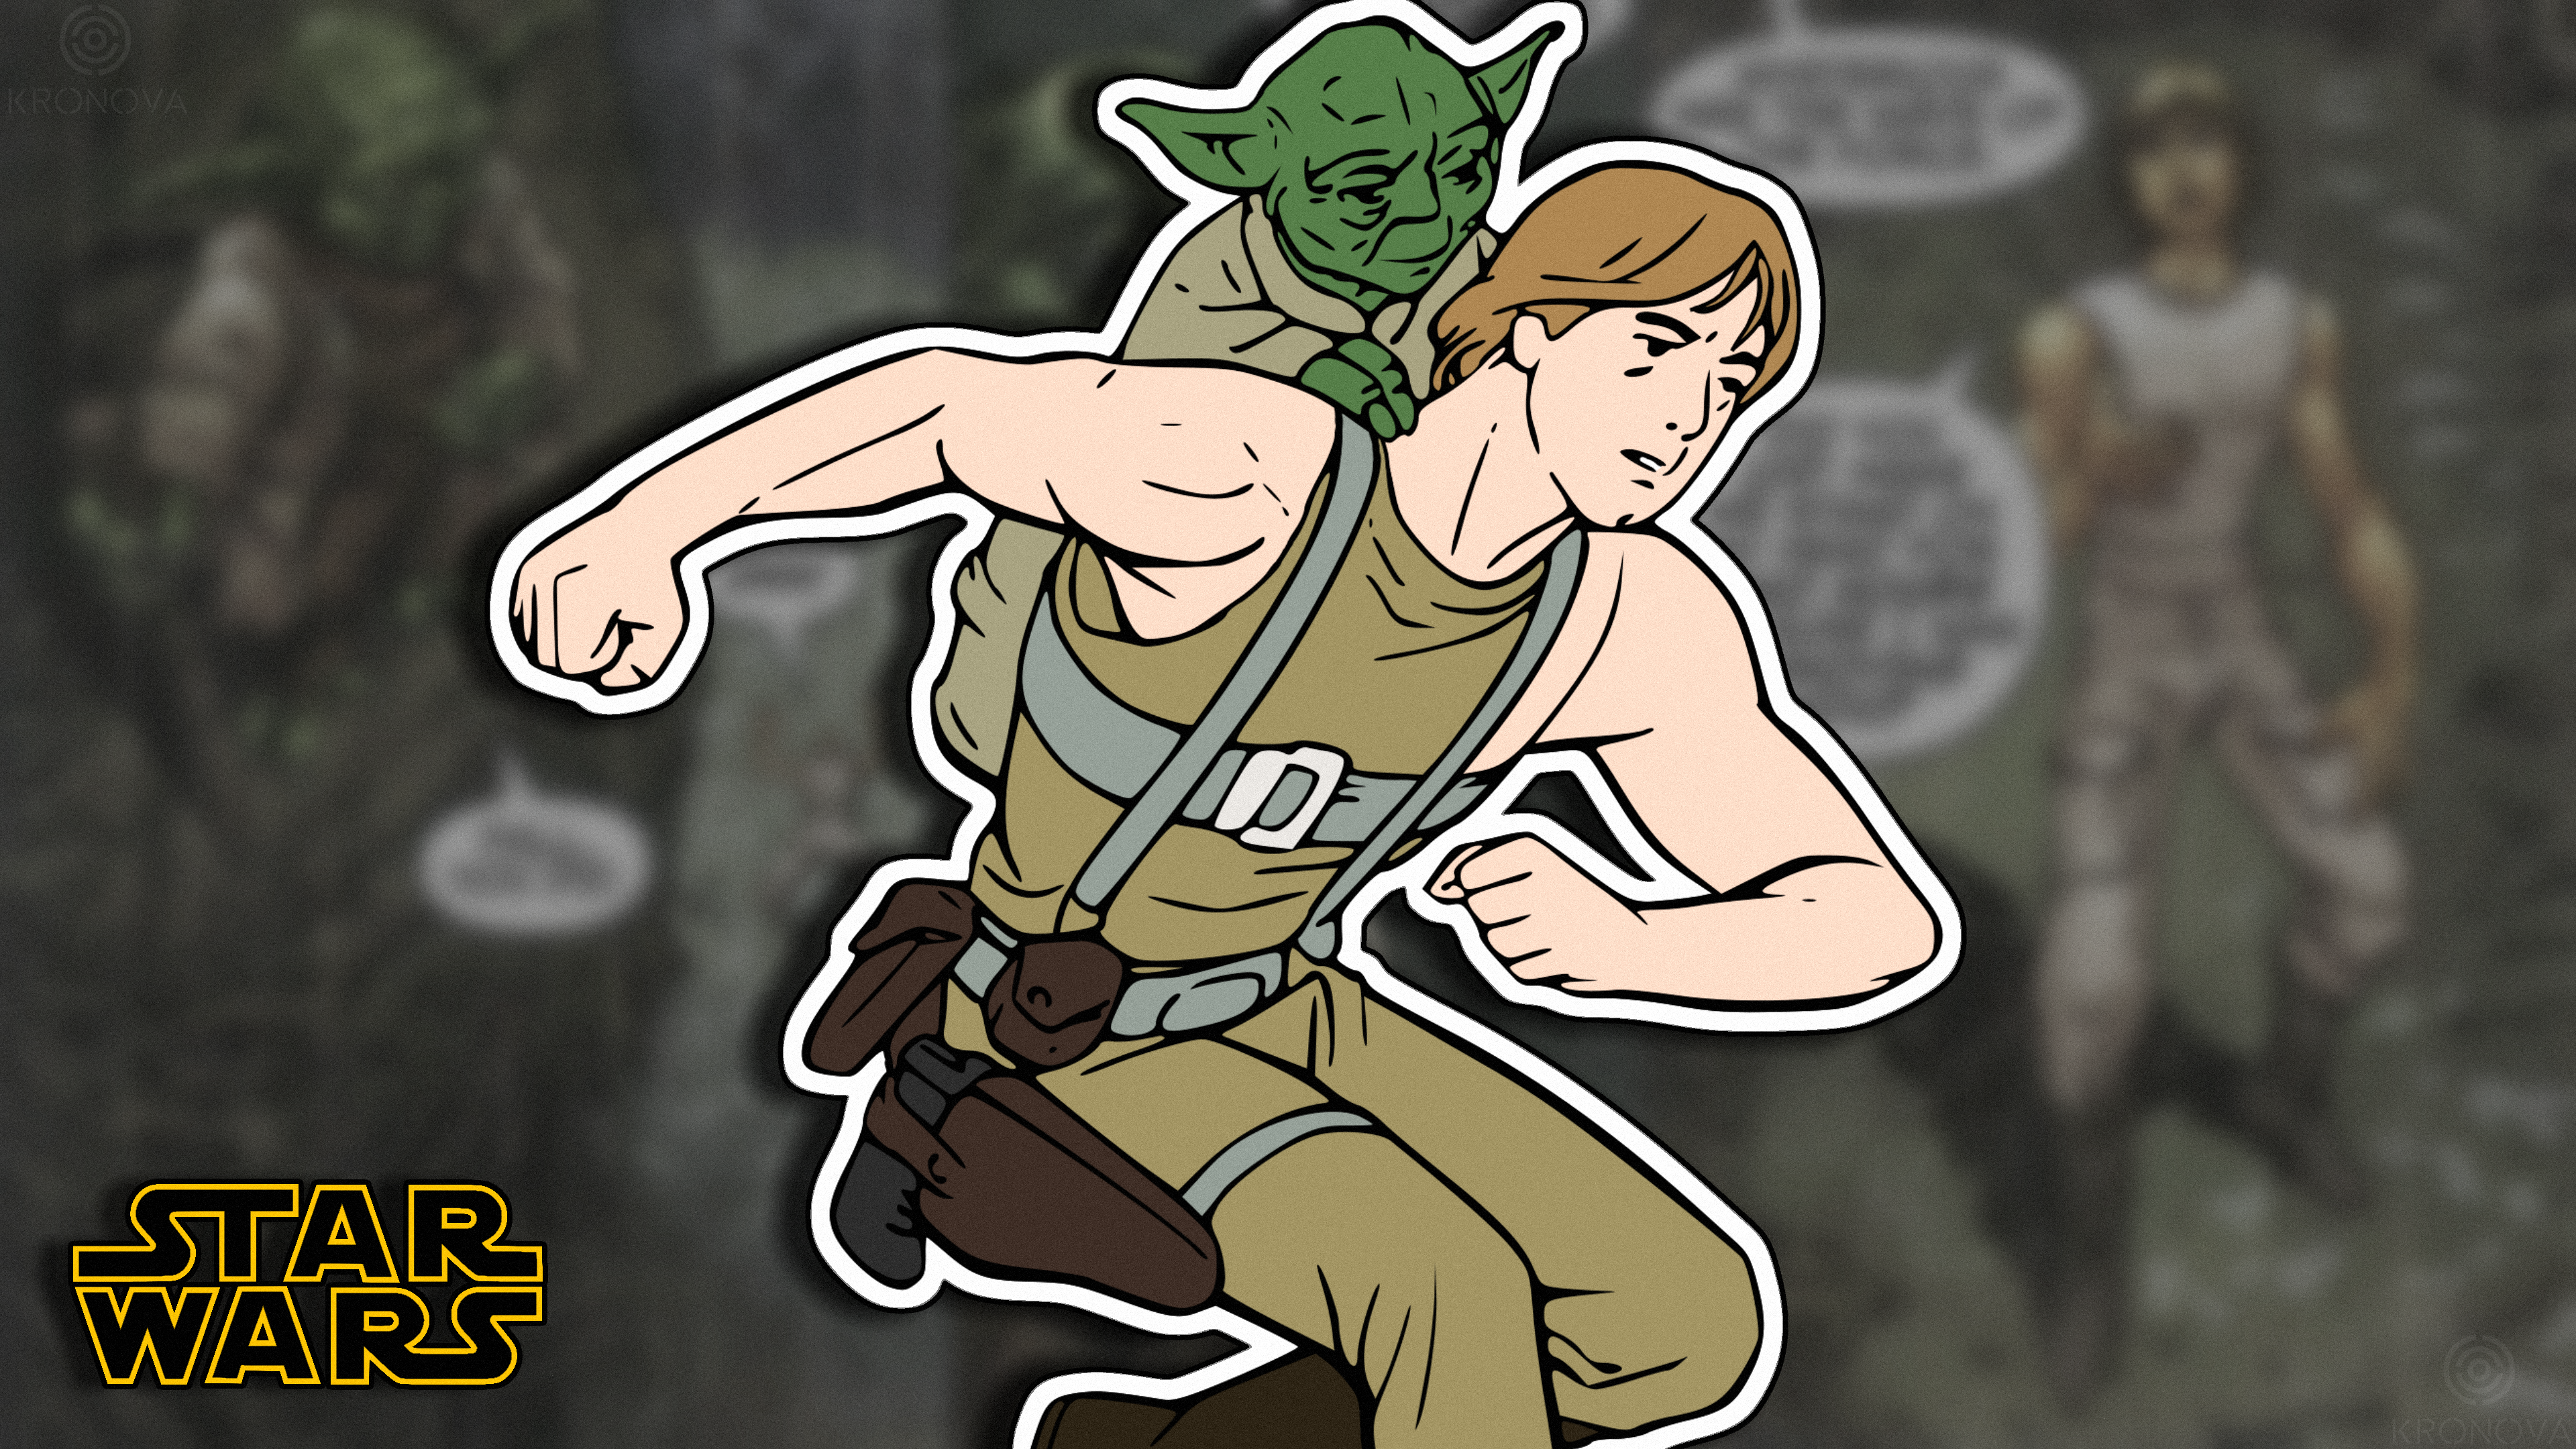 General 3840x2160 Star Wars Dagobah Luke Skywalker Yoda comics stickers movies men